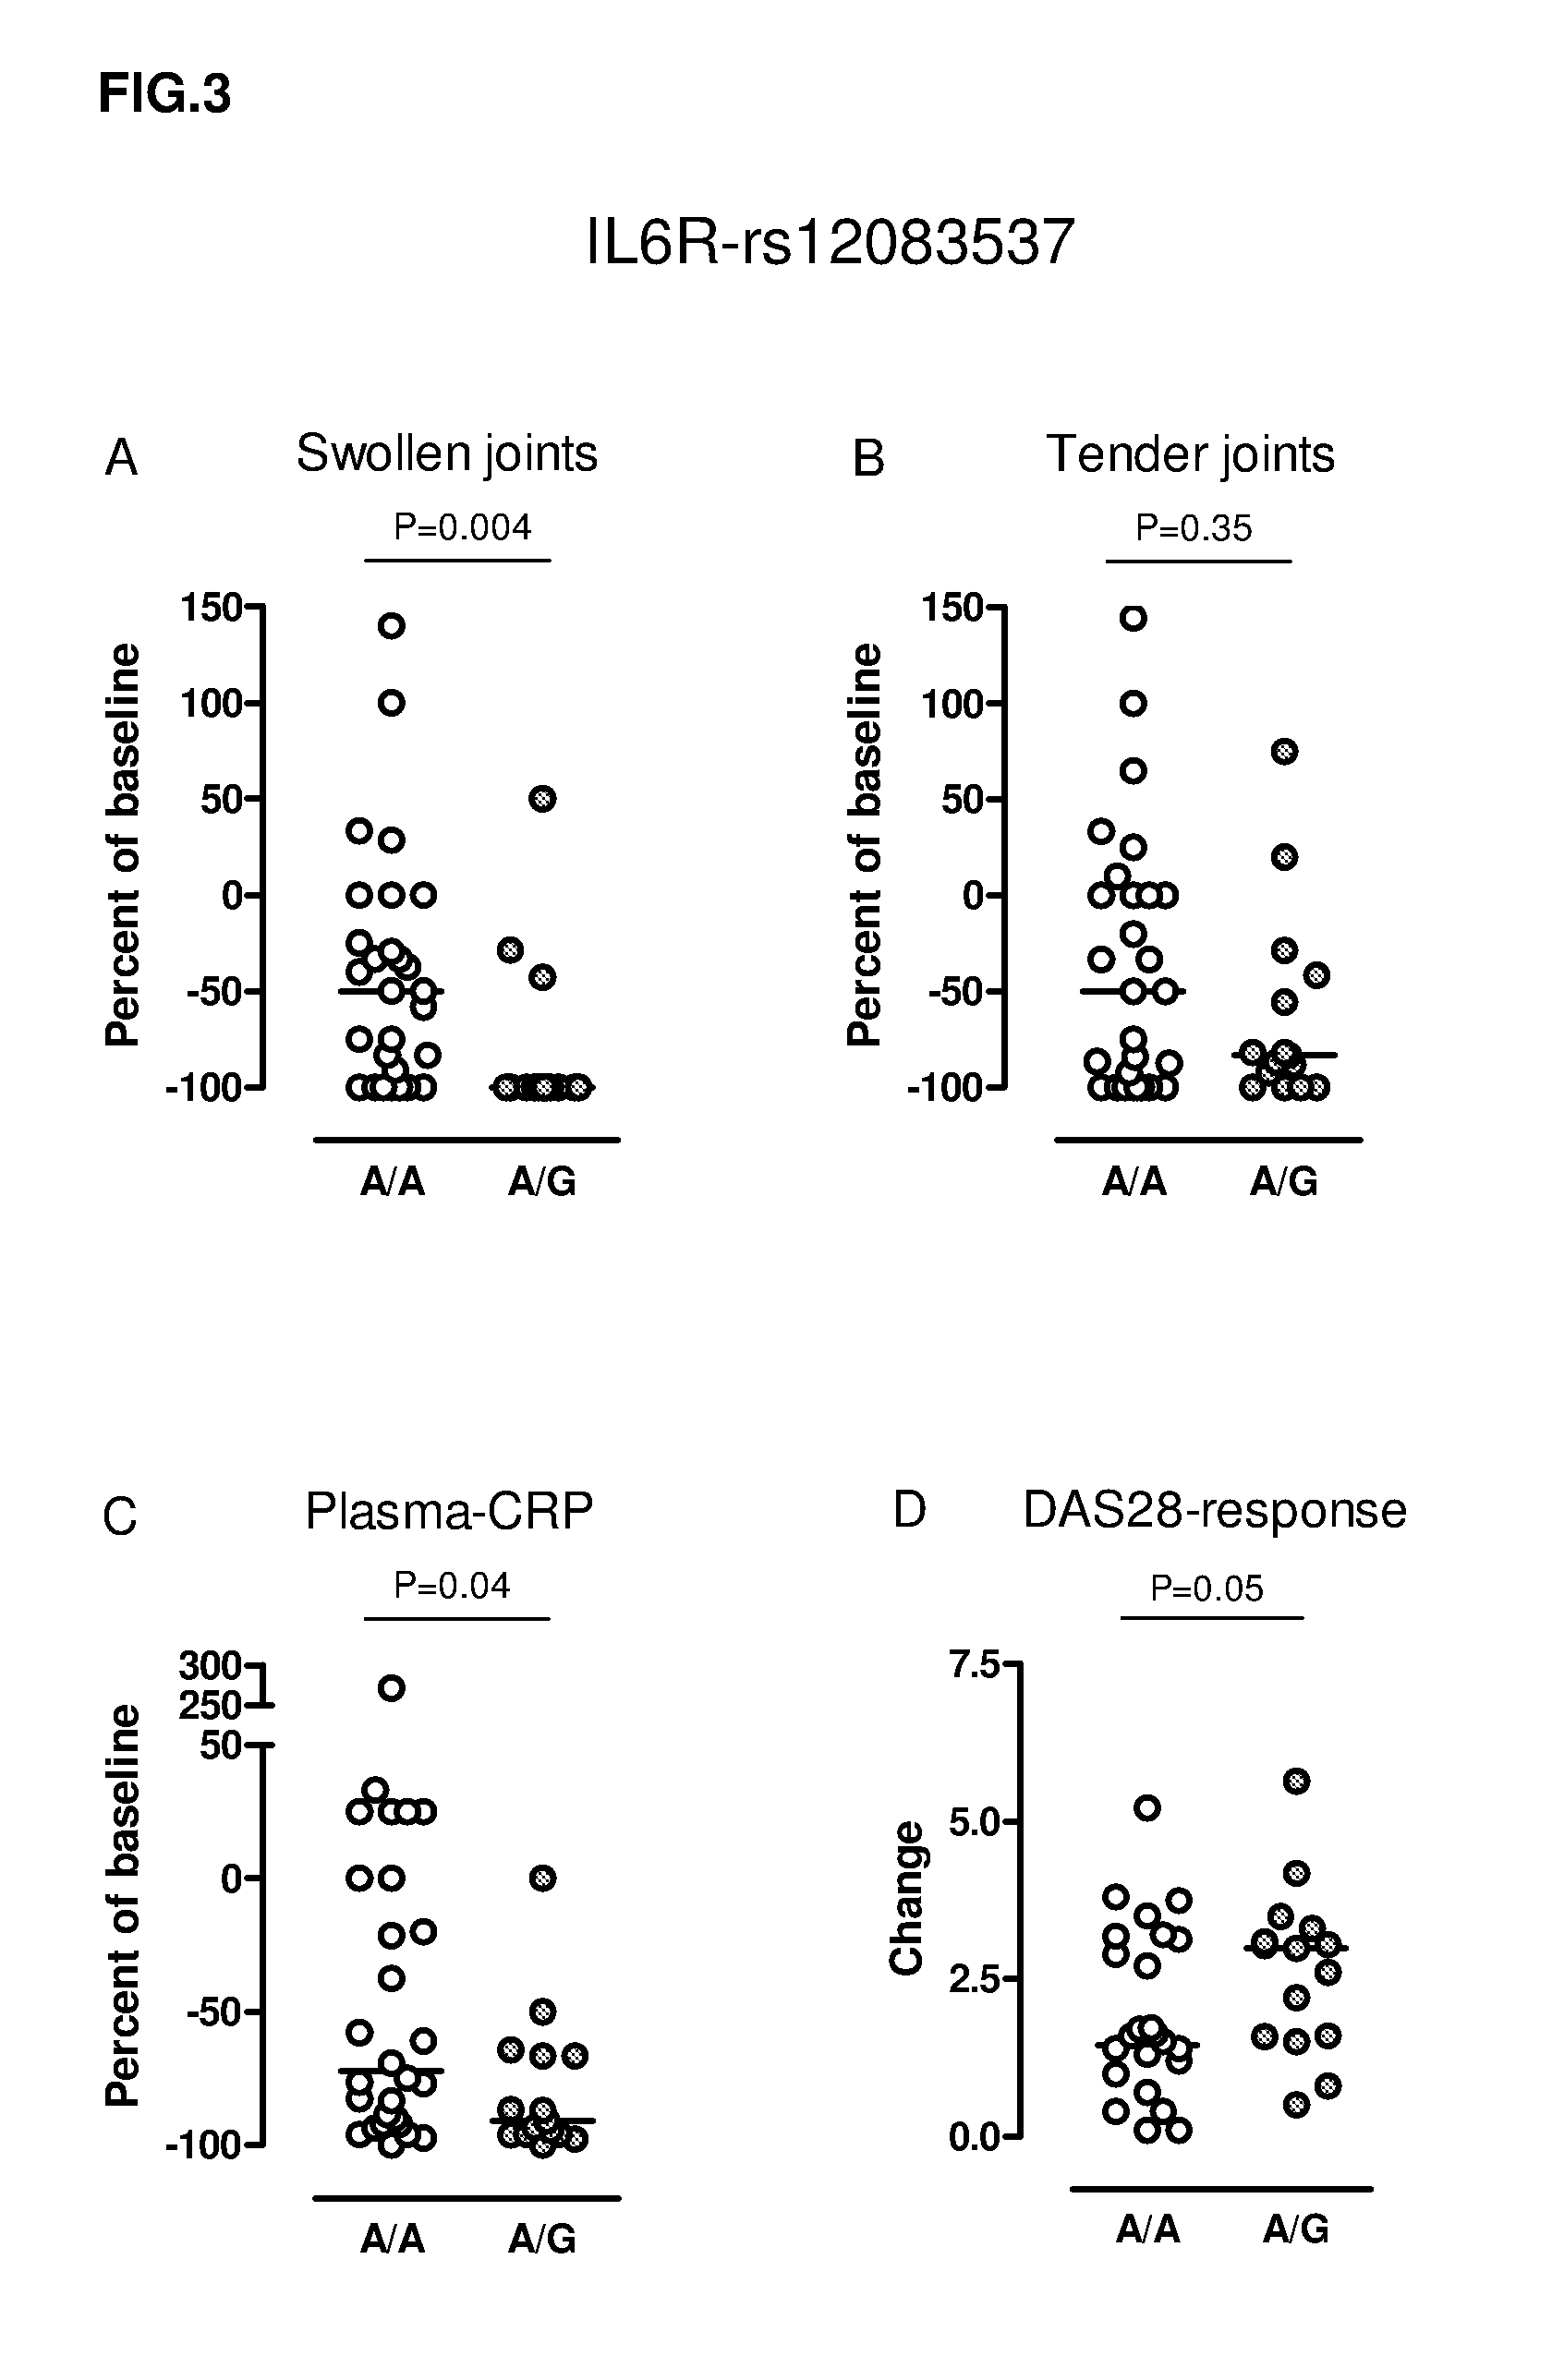 Genetic variations in the interleukin-6 receptor gene as predictors of the response of patients to treatment with interleukin-6 receptor inhibitors